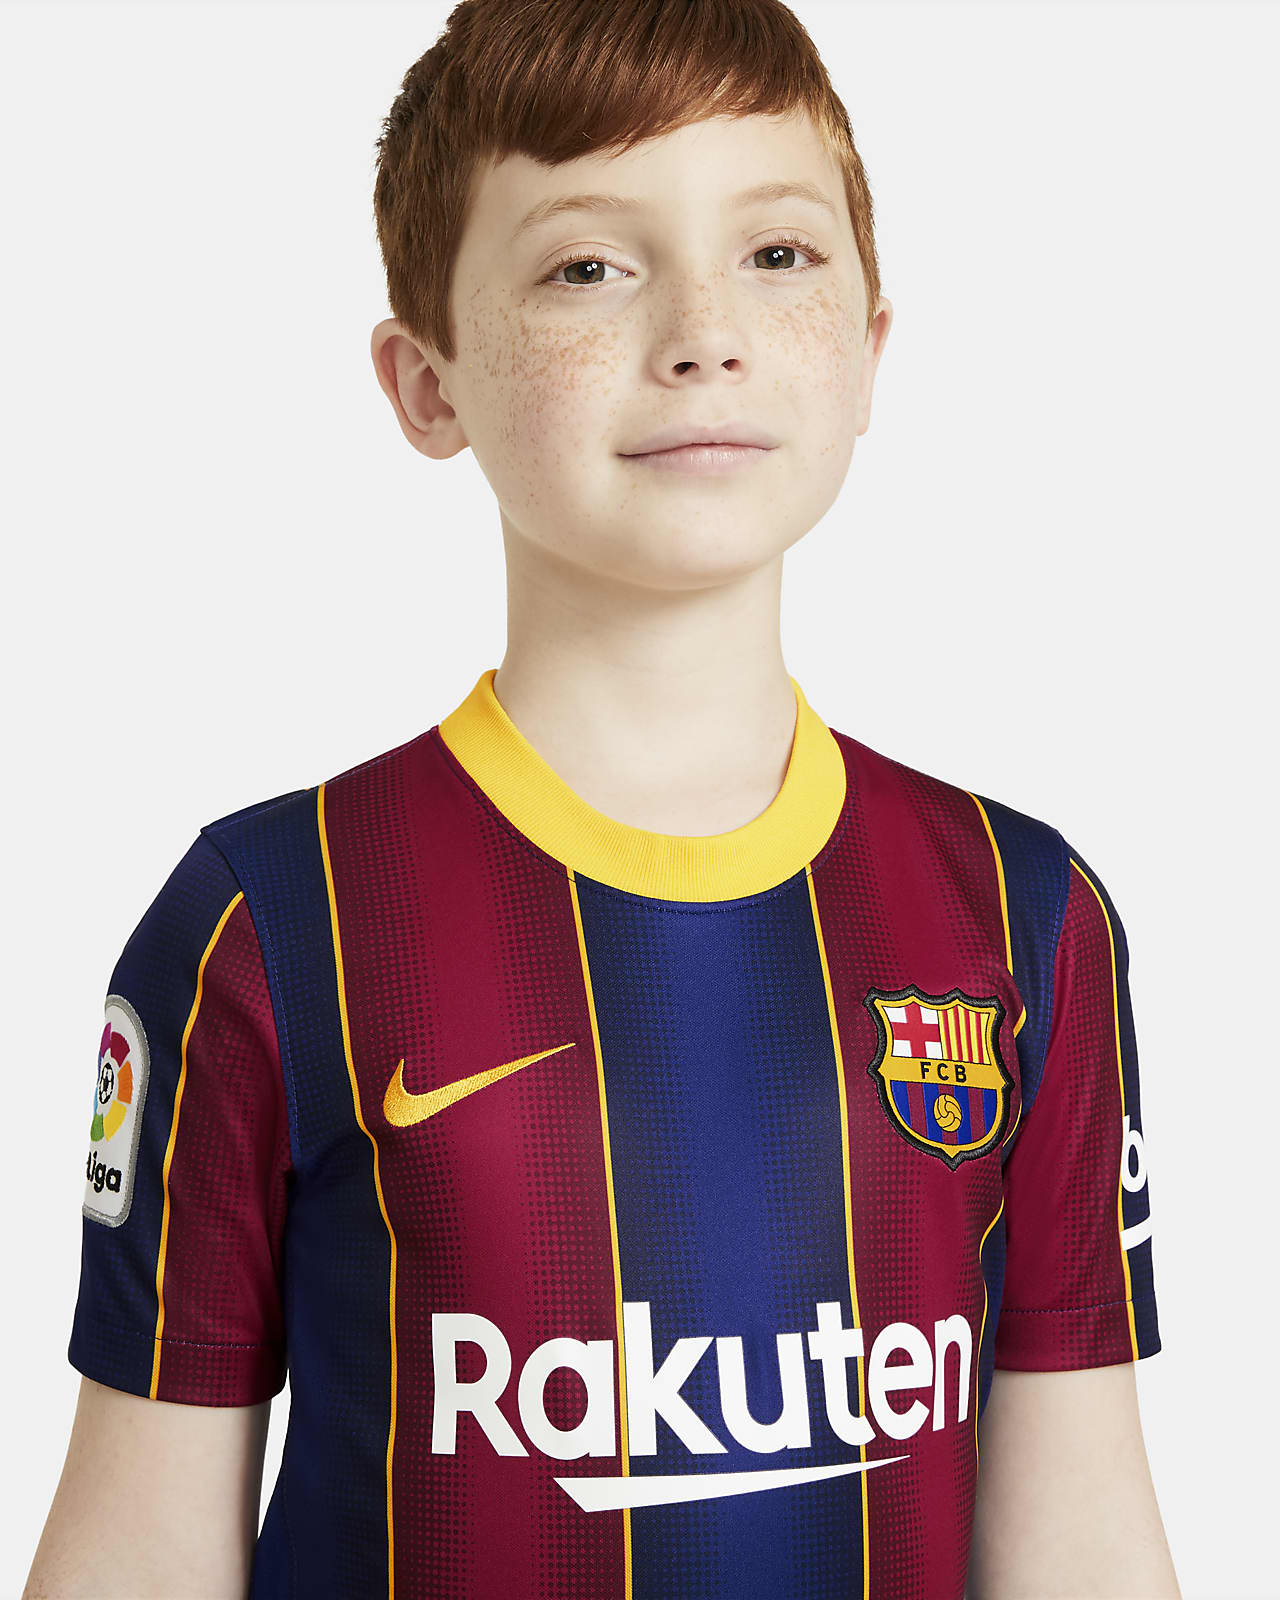 Camiseta fútbol de local para niños talla Stadium FC Barcelona 2020/21. Nike.com